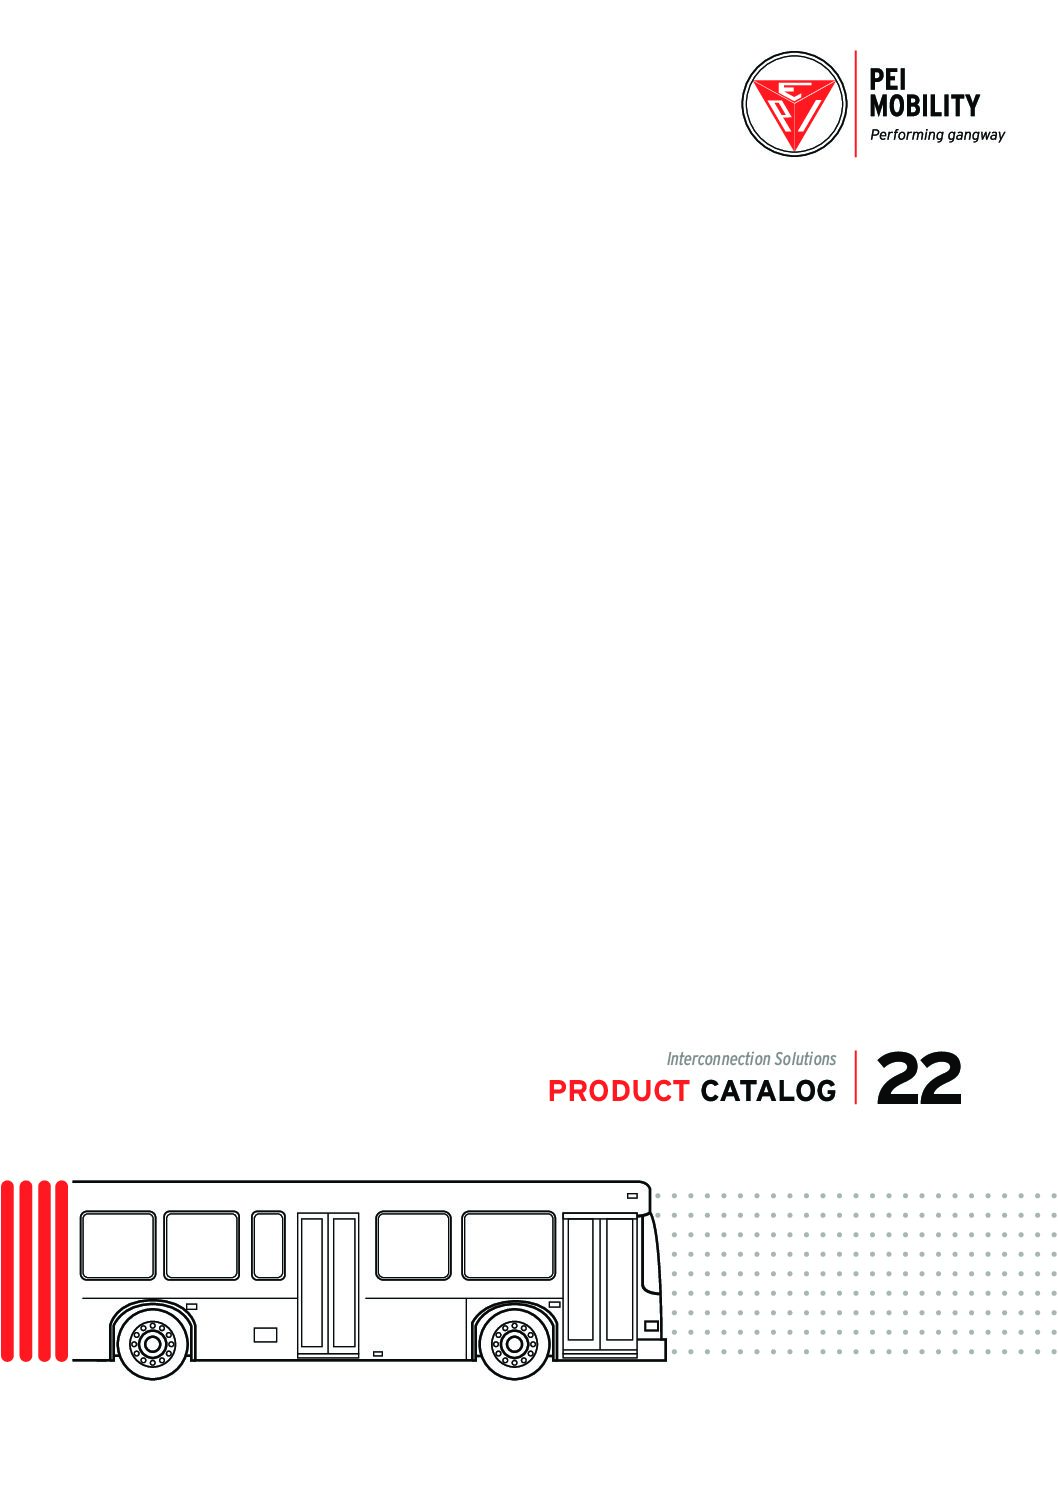 PEI Mobility: Product Catalog 2022